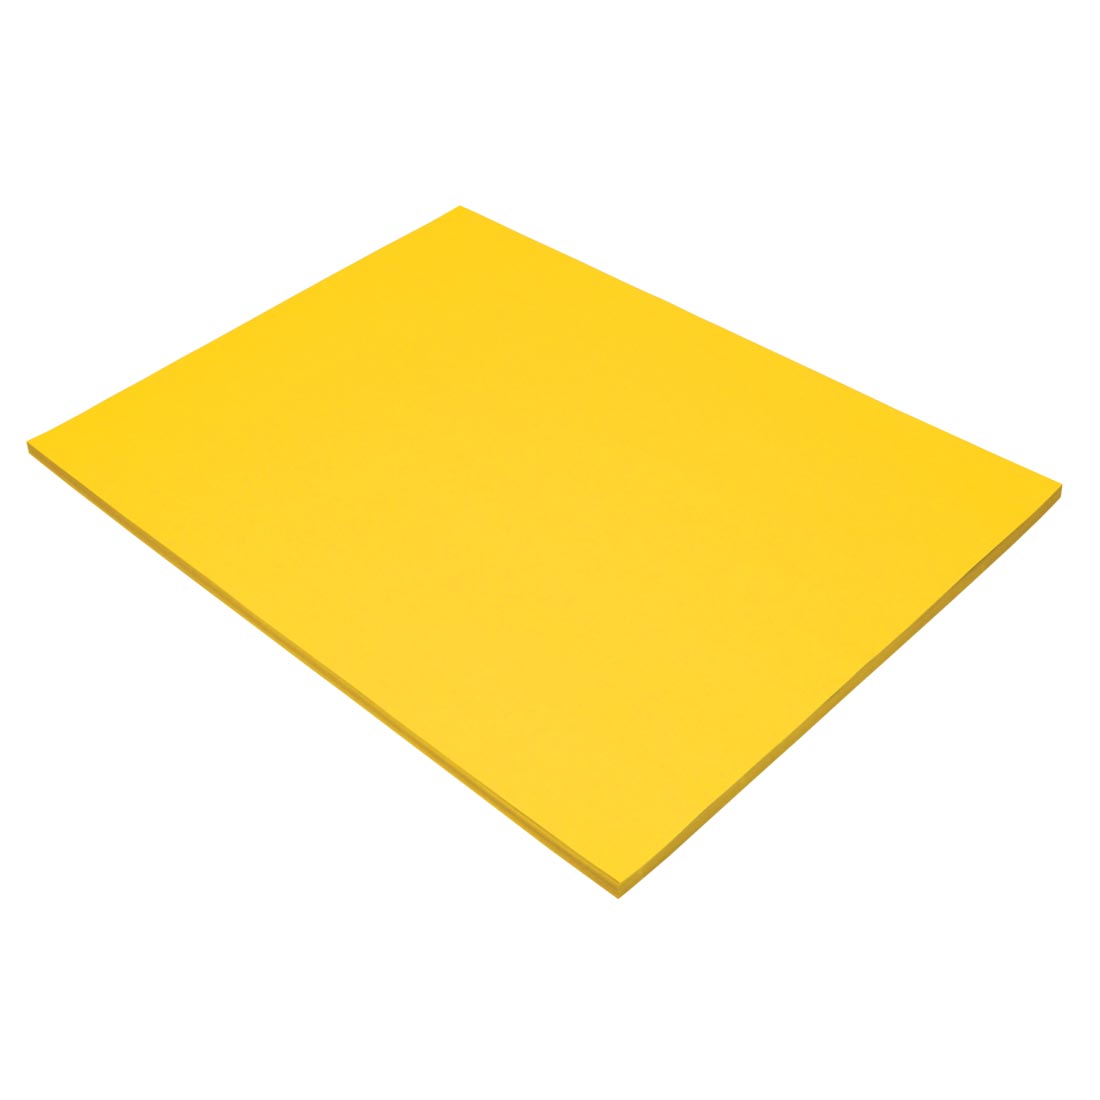 Yellow Tru-Ray Construction Paper